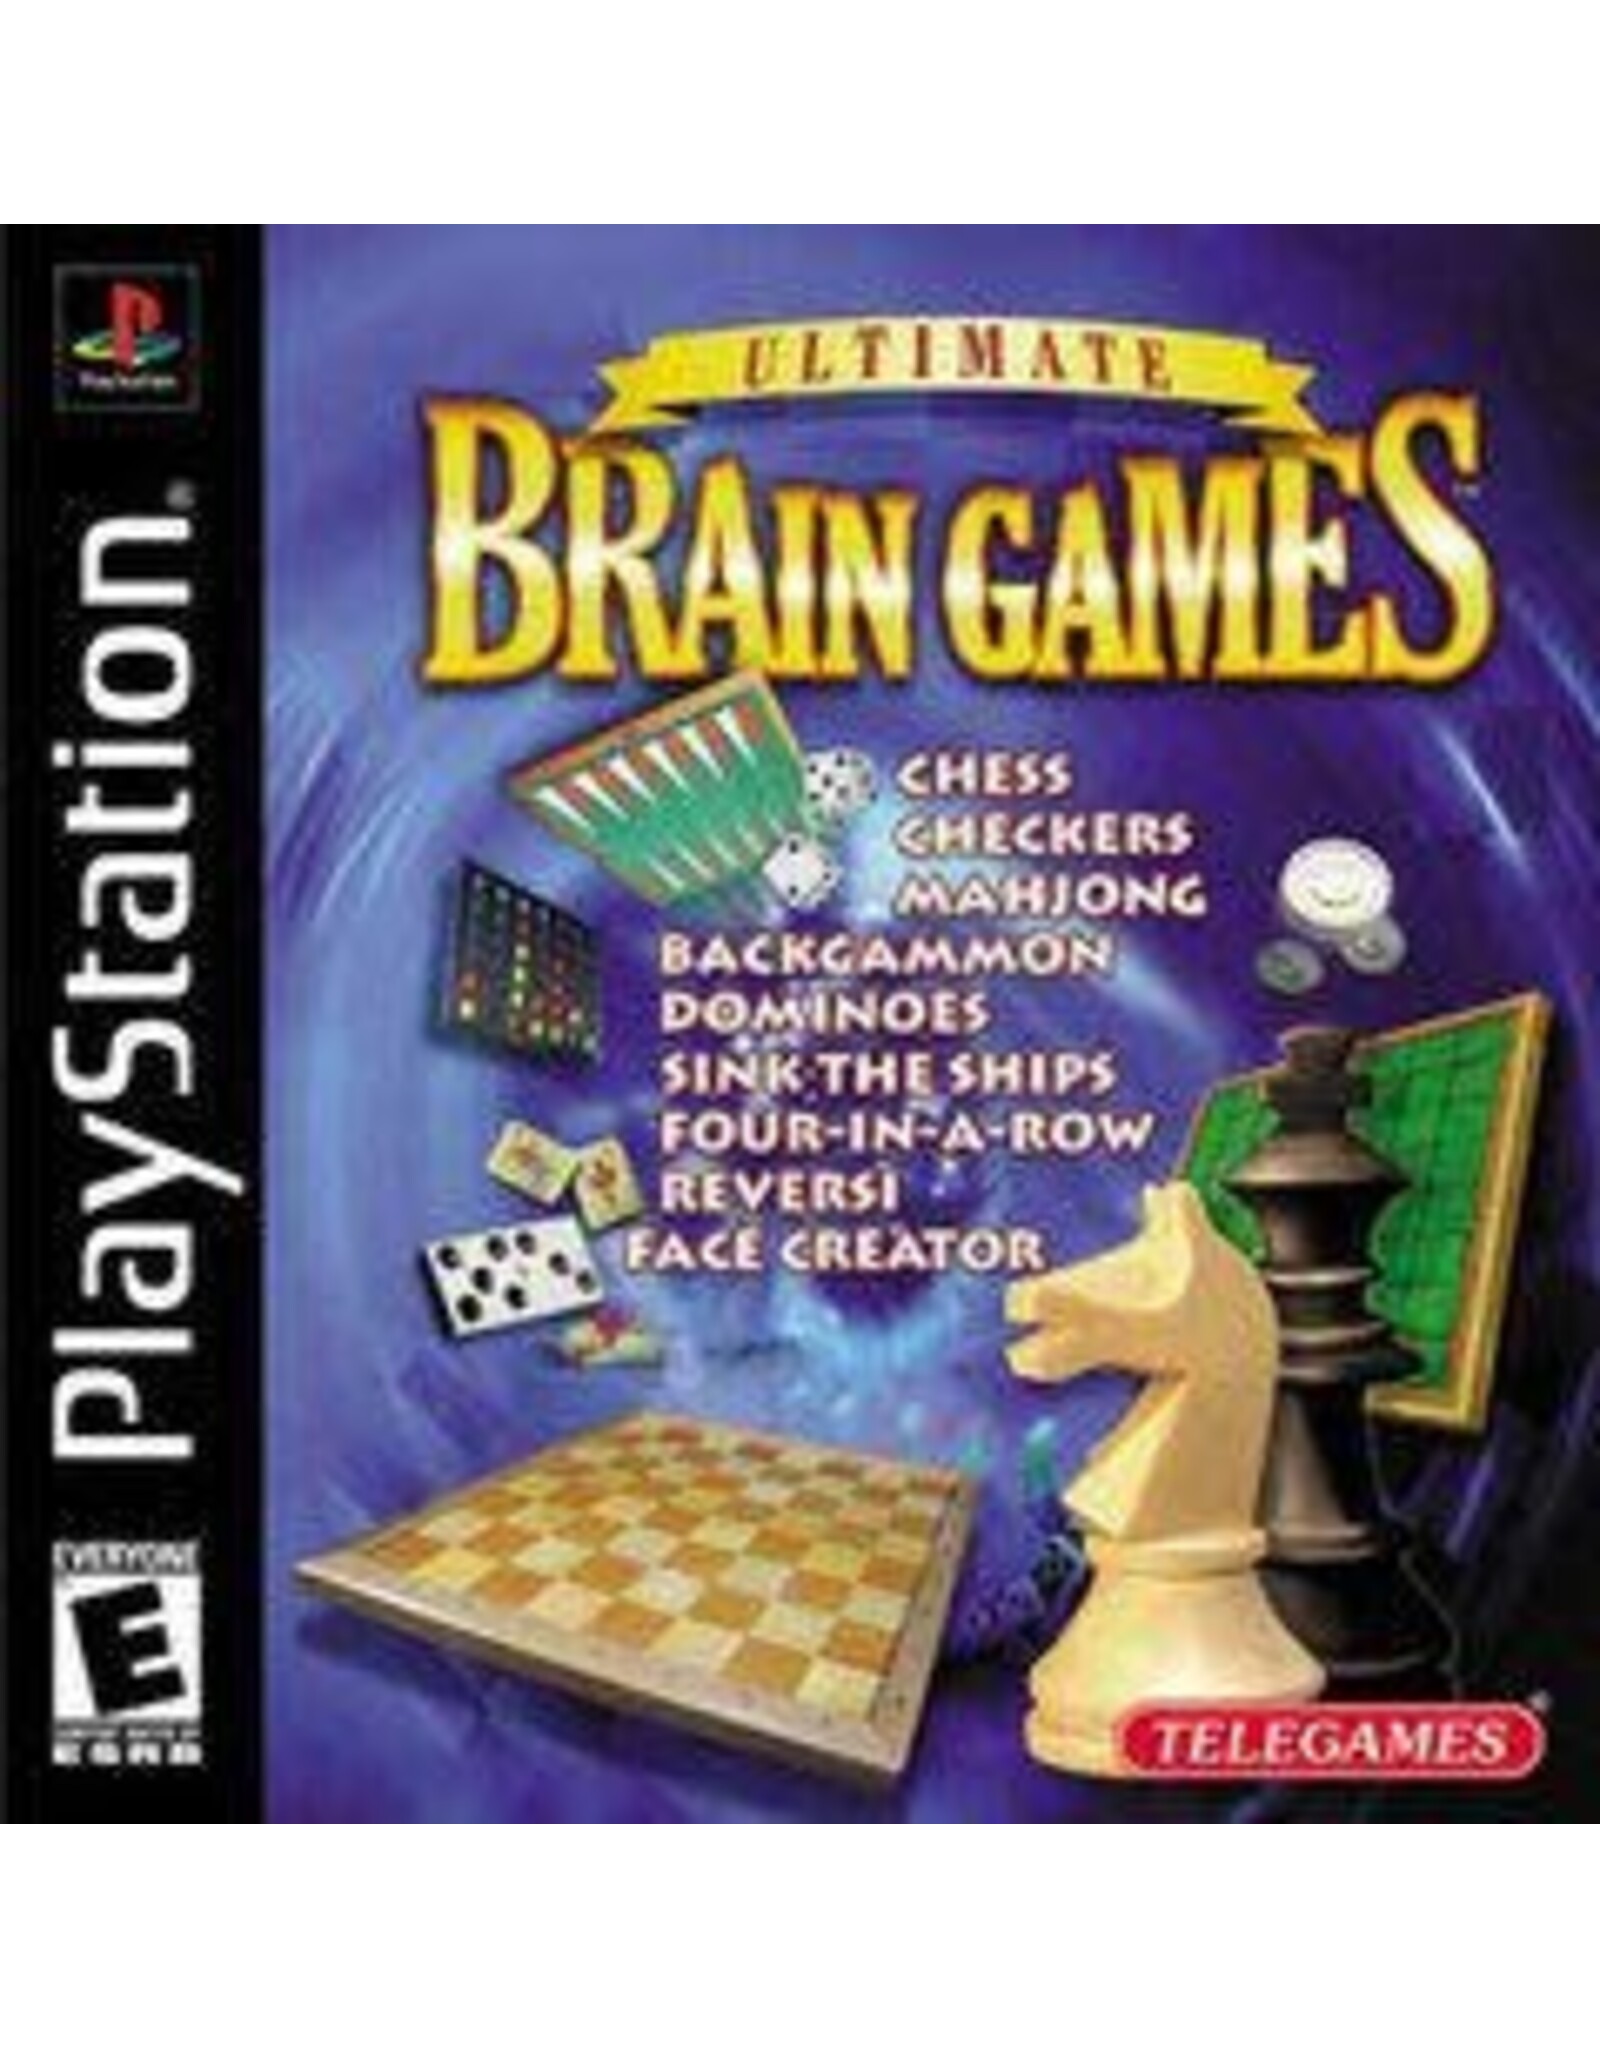 Playstation Ultimate Brain Games (CiB)